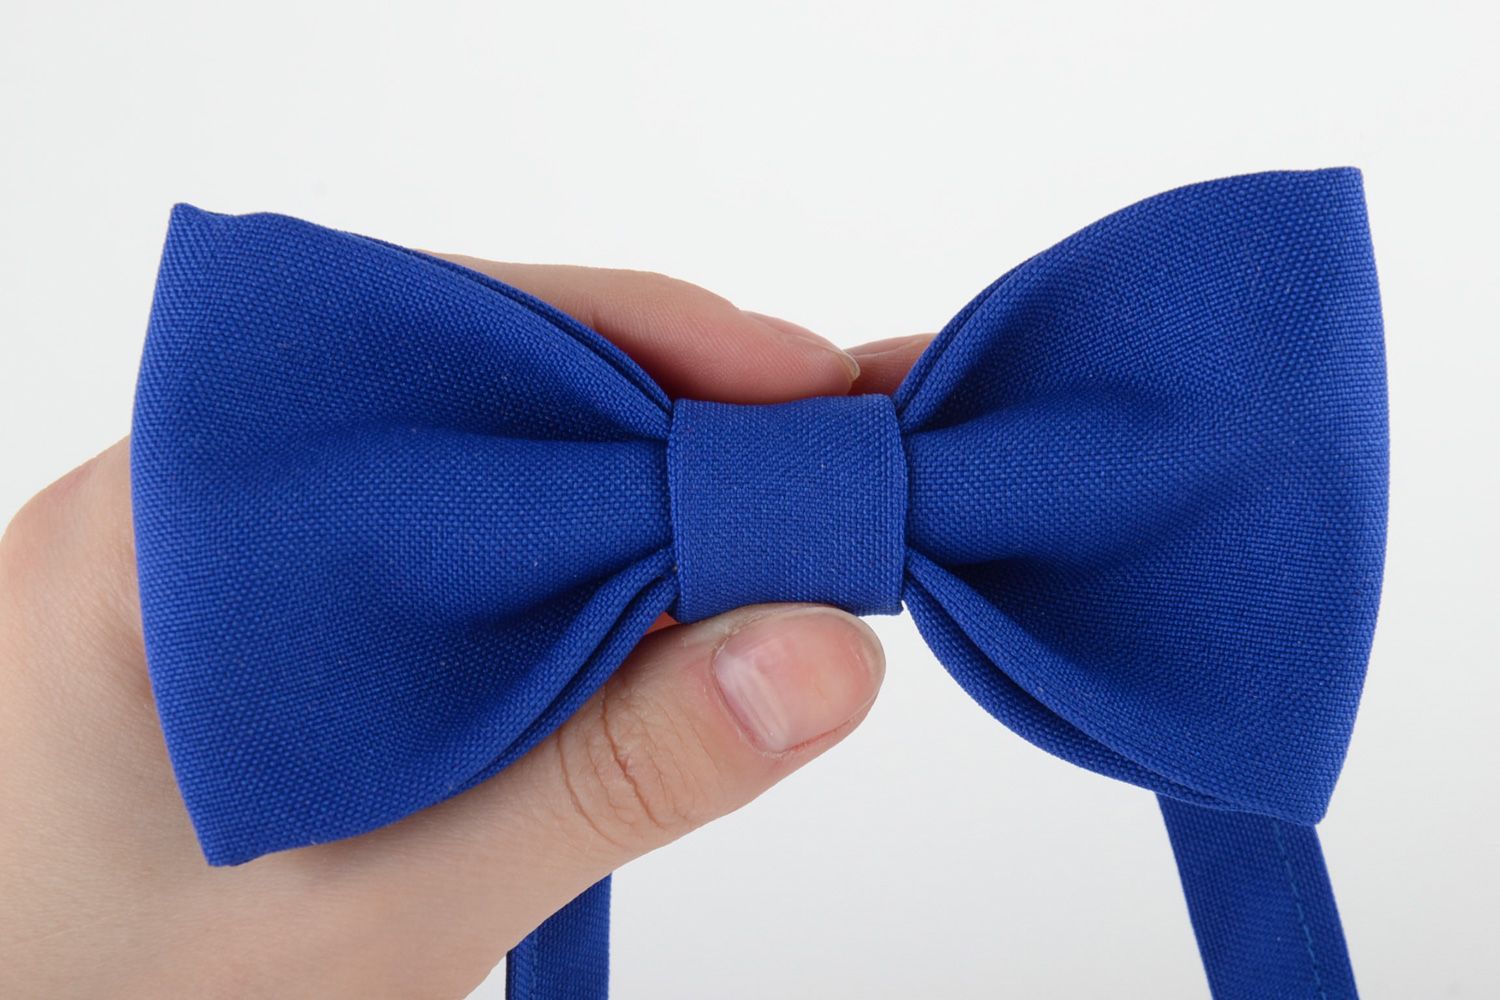 Festive handmade bow tie sewn of bright blue costume fabric for stylish men photo 5